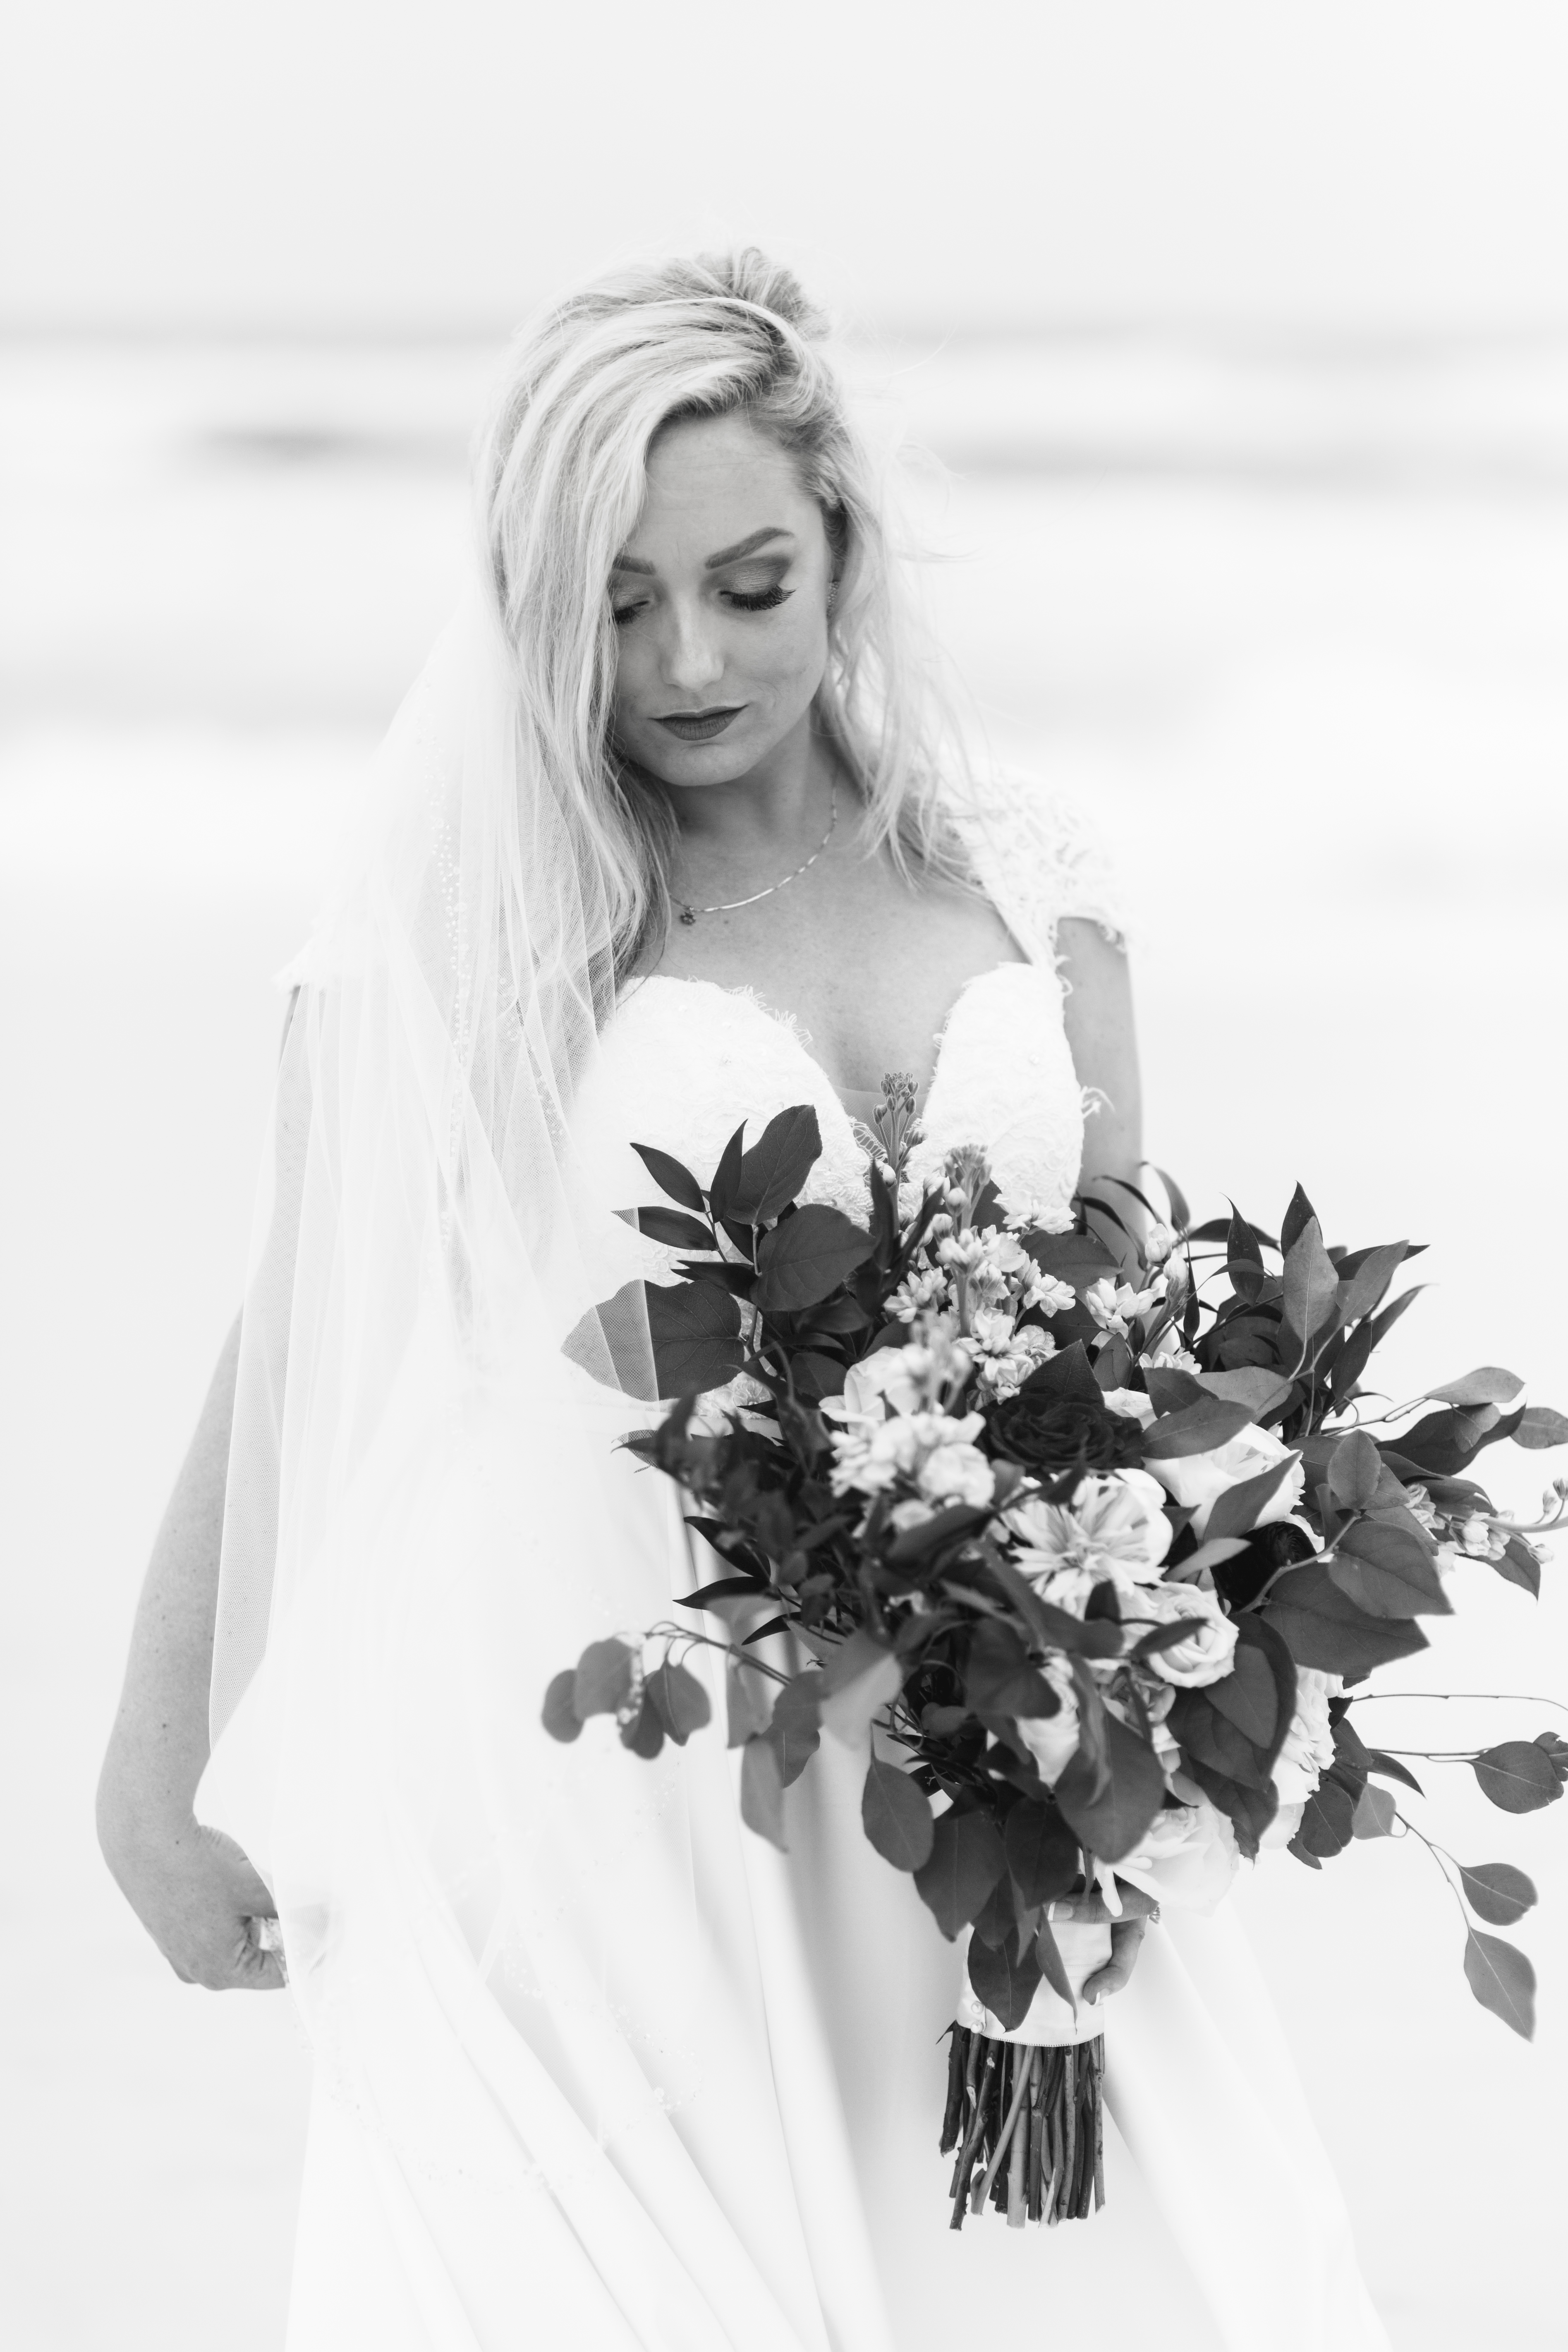 Destin Florida Henderson Beach Inn wedding details and bride